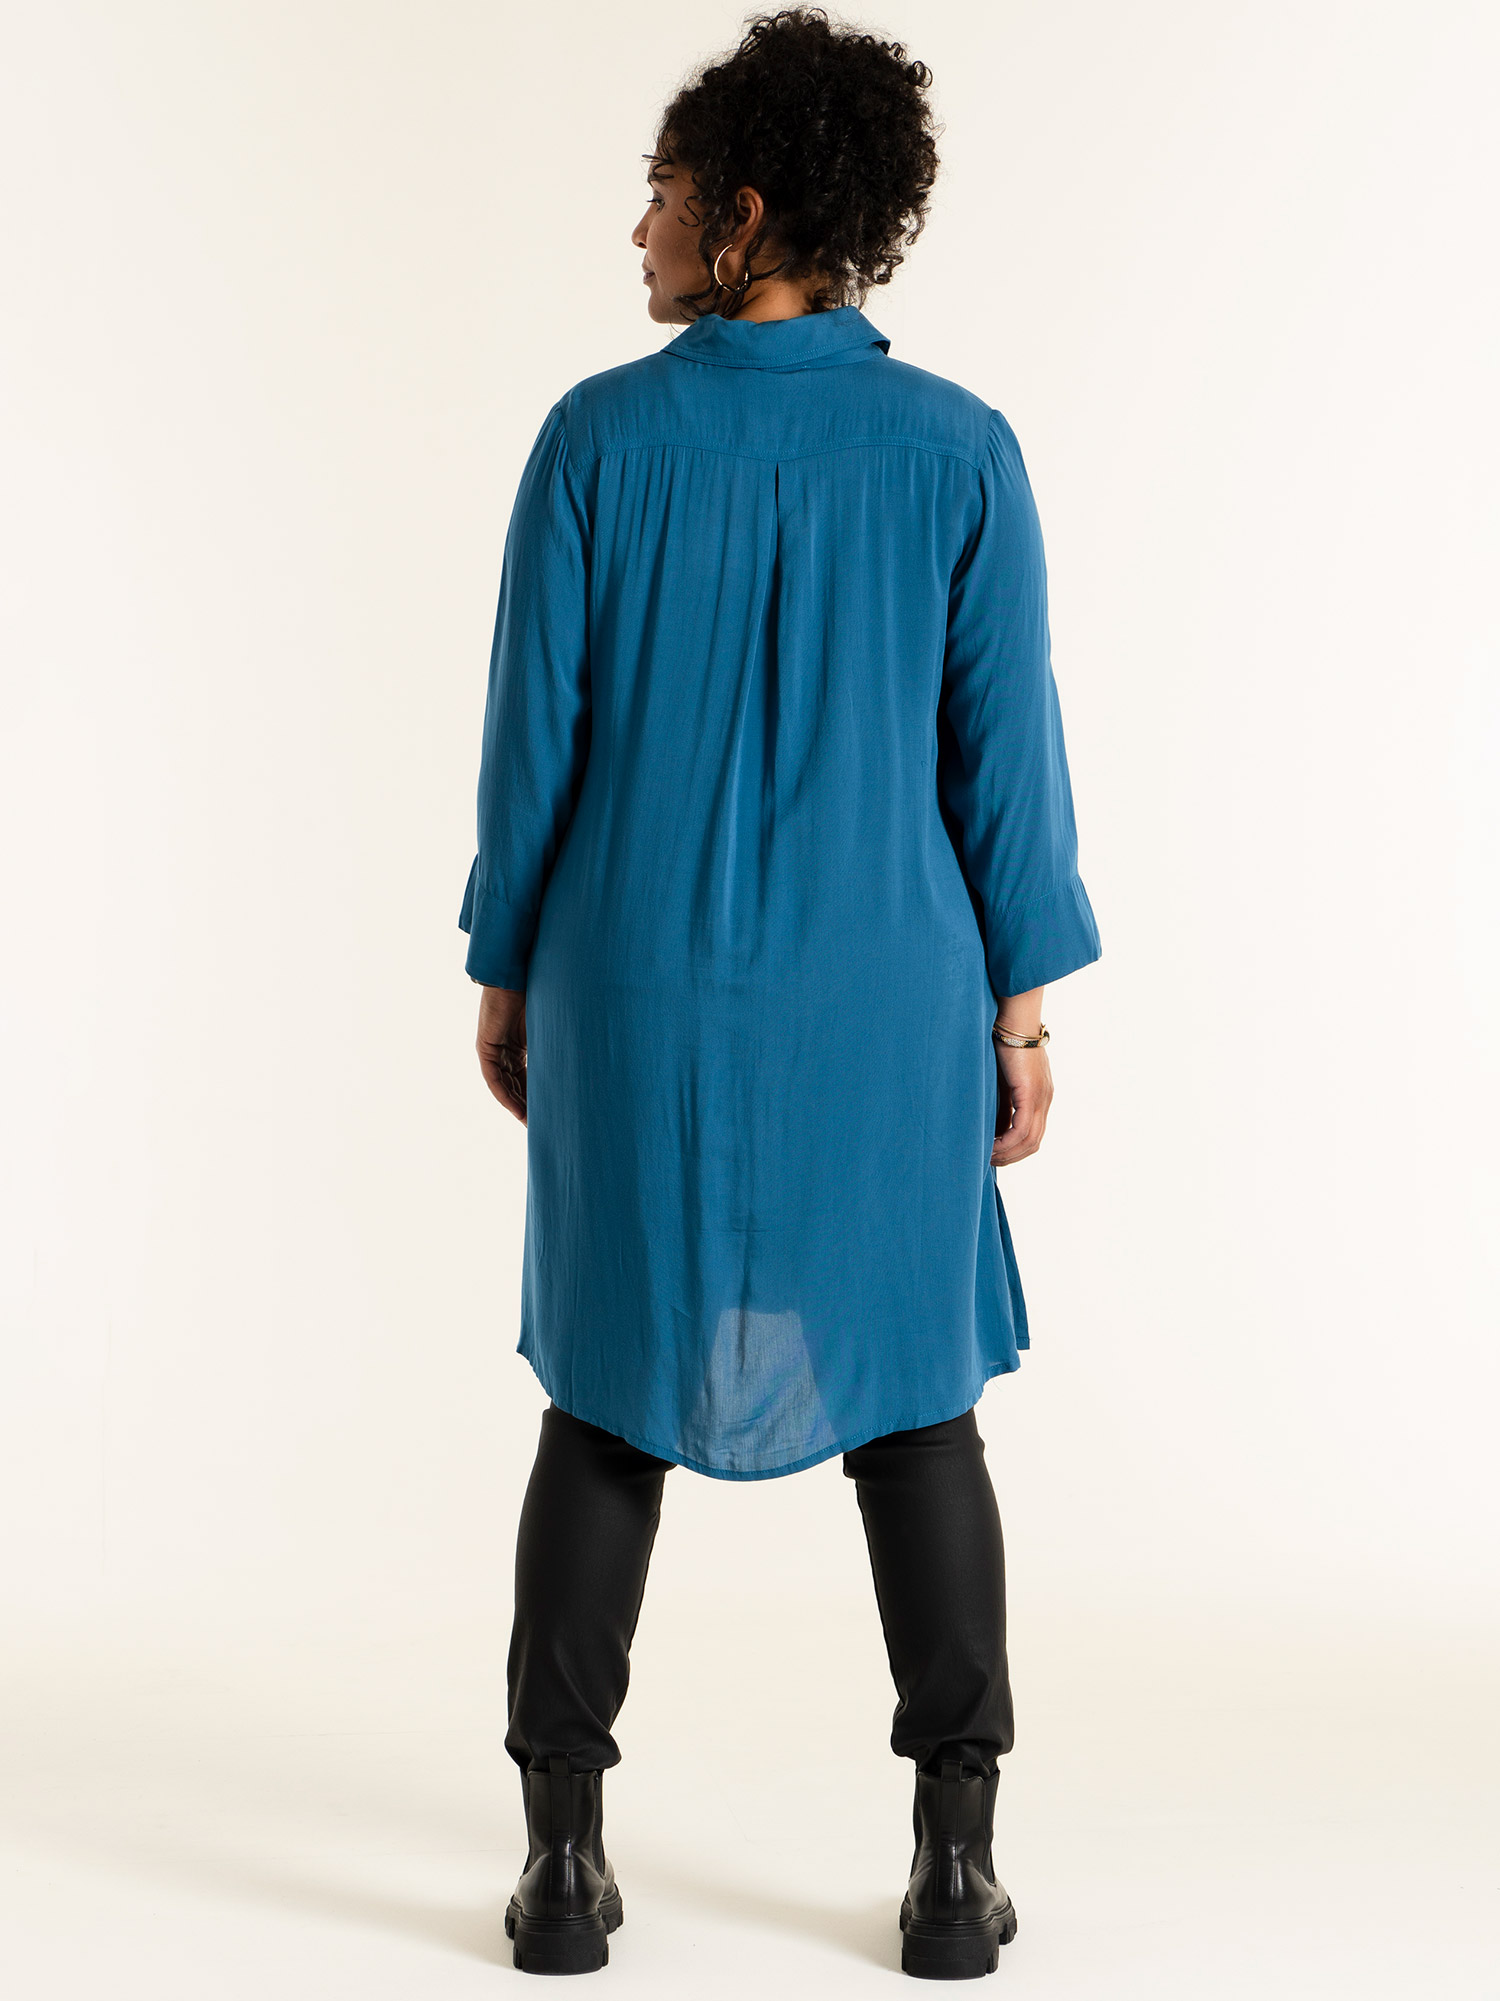 EMILIE - Petroleumblå skjorttunika i viskos fra Studio